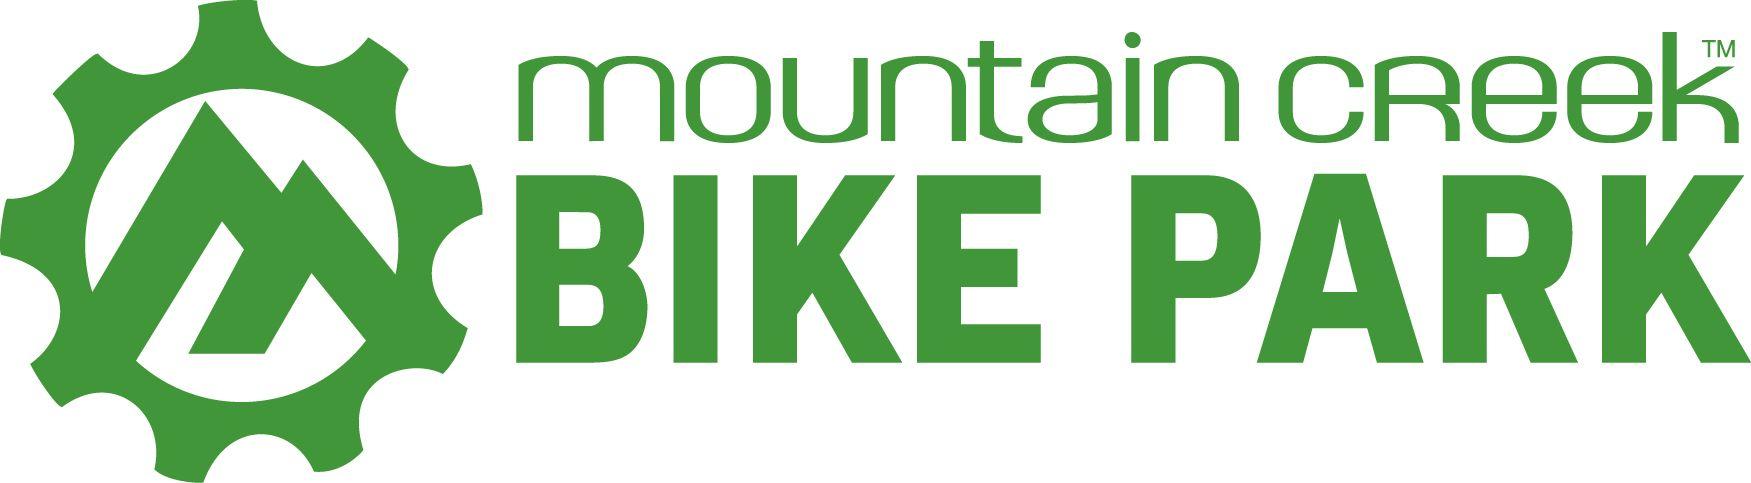 Mountain Creek Logo - Mountain creek Logos